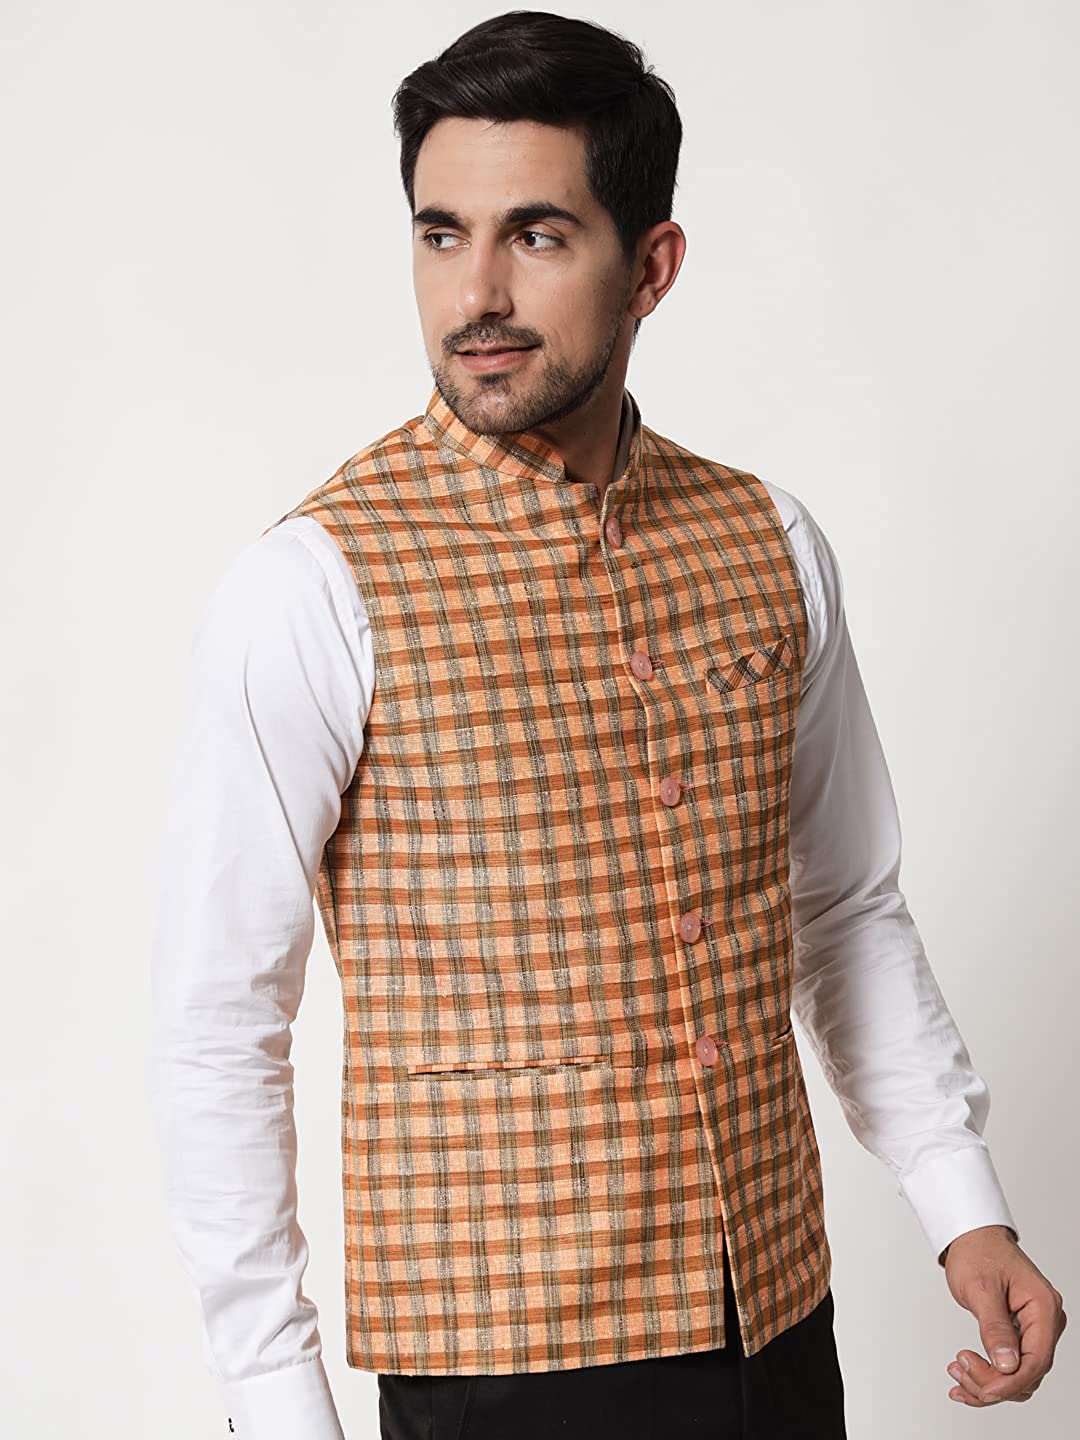 Vatsraa Fusion Modi Jacket / Waistcoat - Chabila Block Check Patterns - South Cotton Jacket